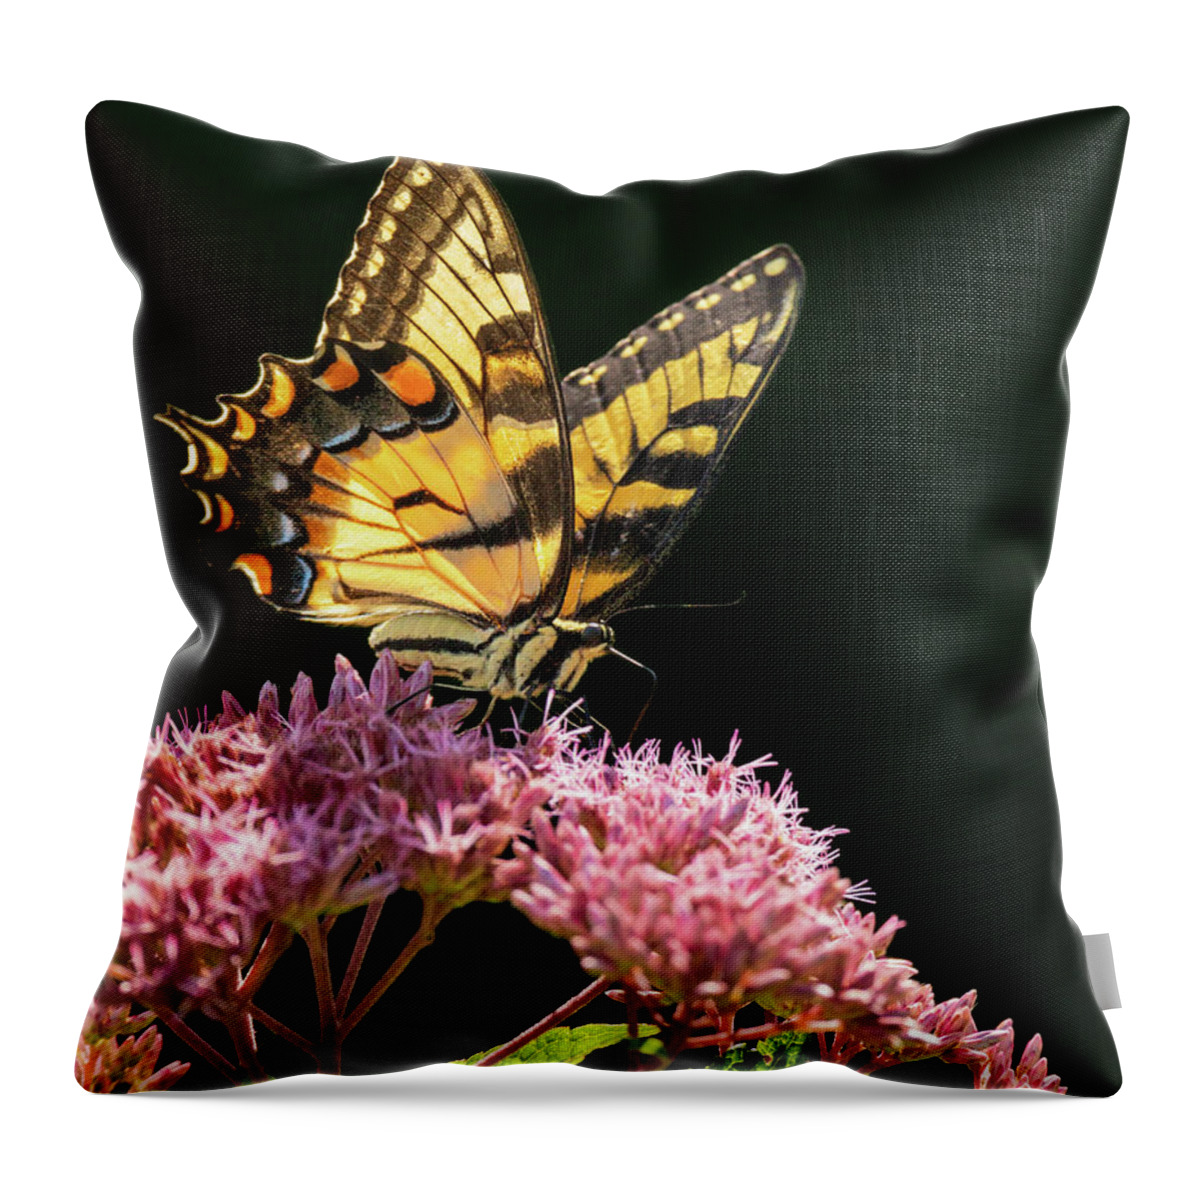 Butterfly Throw Pillow featuring the photograph Swallowtail Summer Light by Rachel Morrison